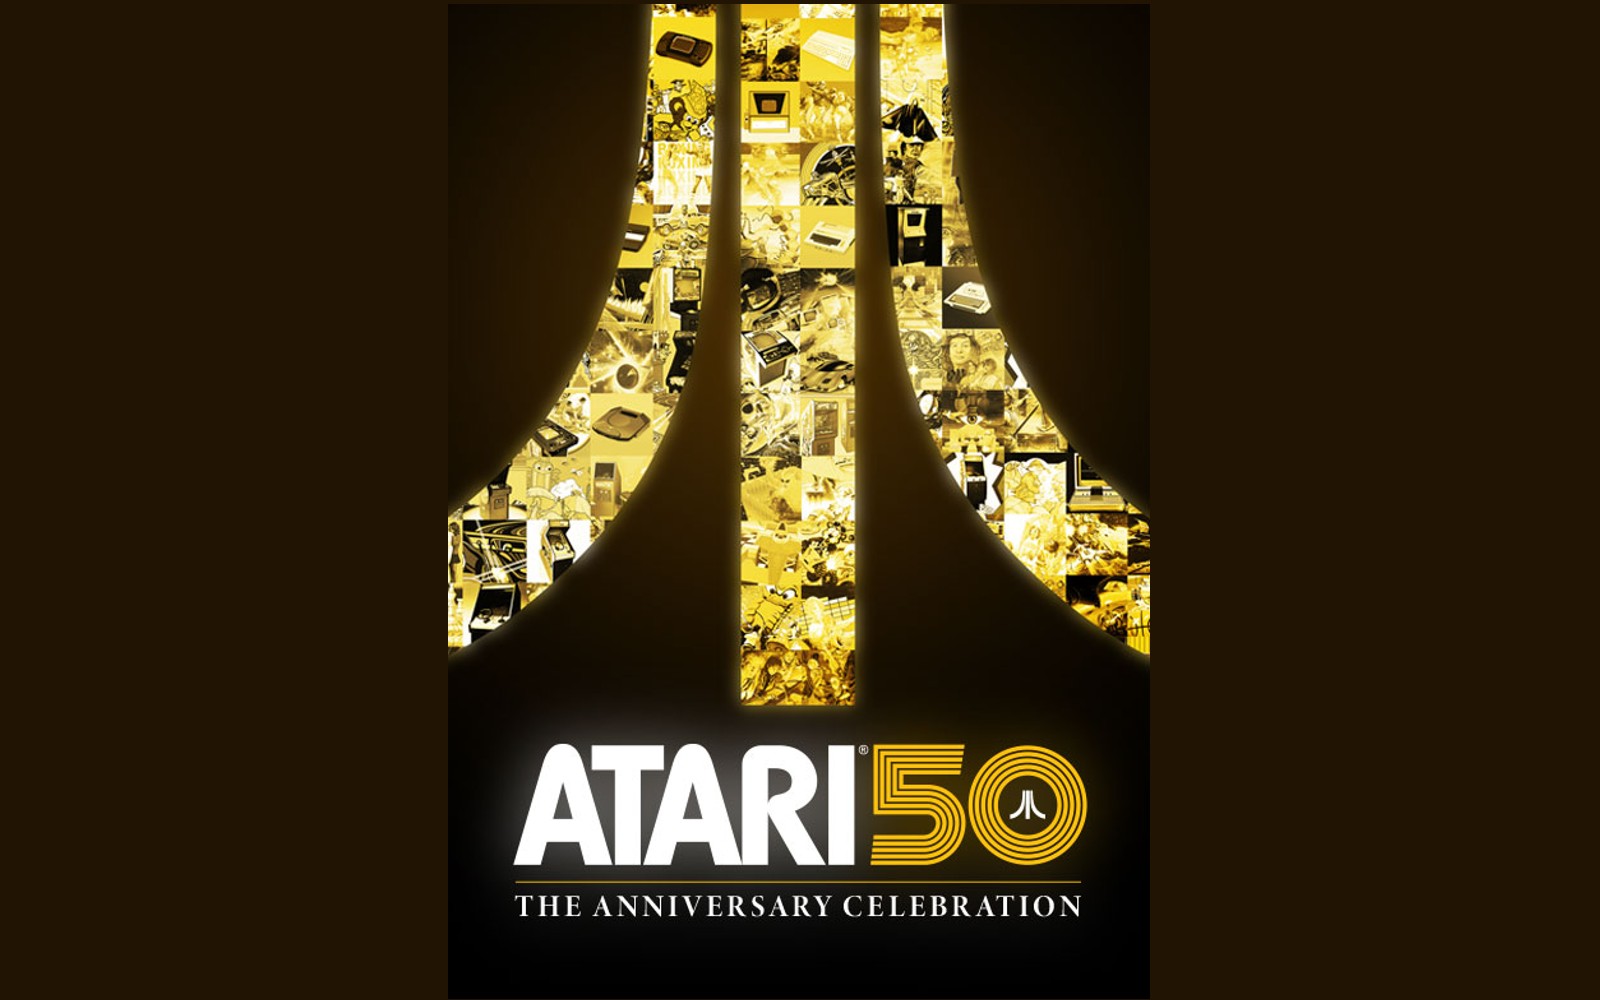 ‘Atari 50: The Anniversary Celebration’ brings together more than 90 games this fall